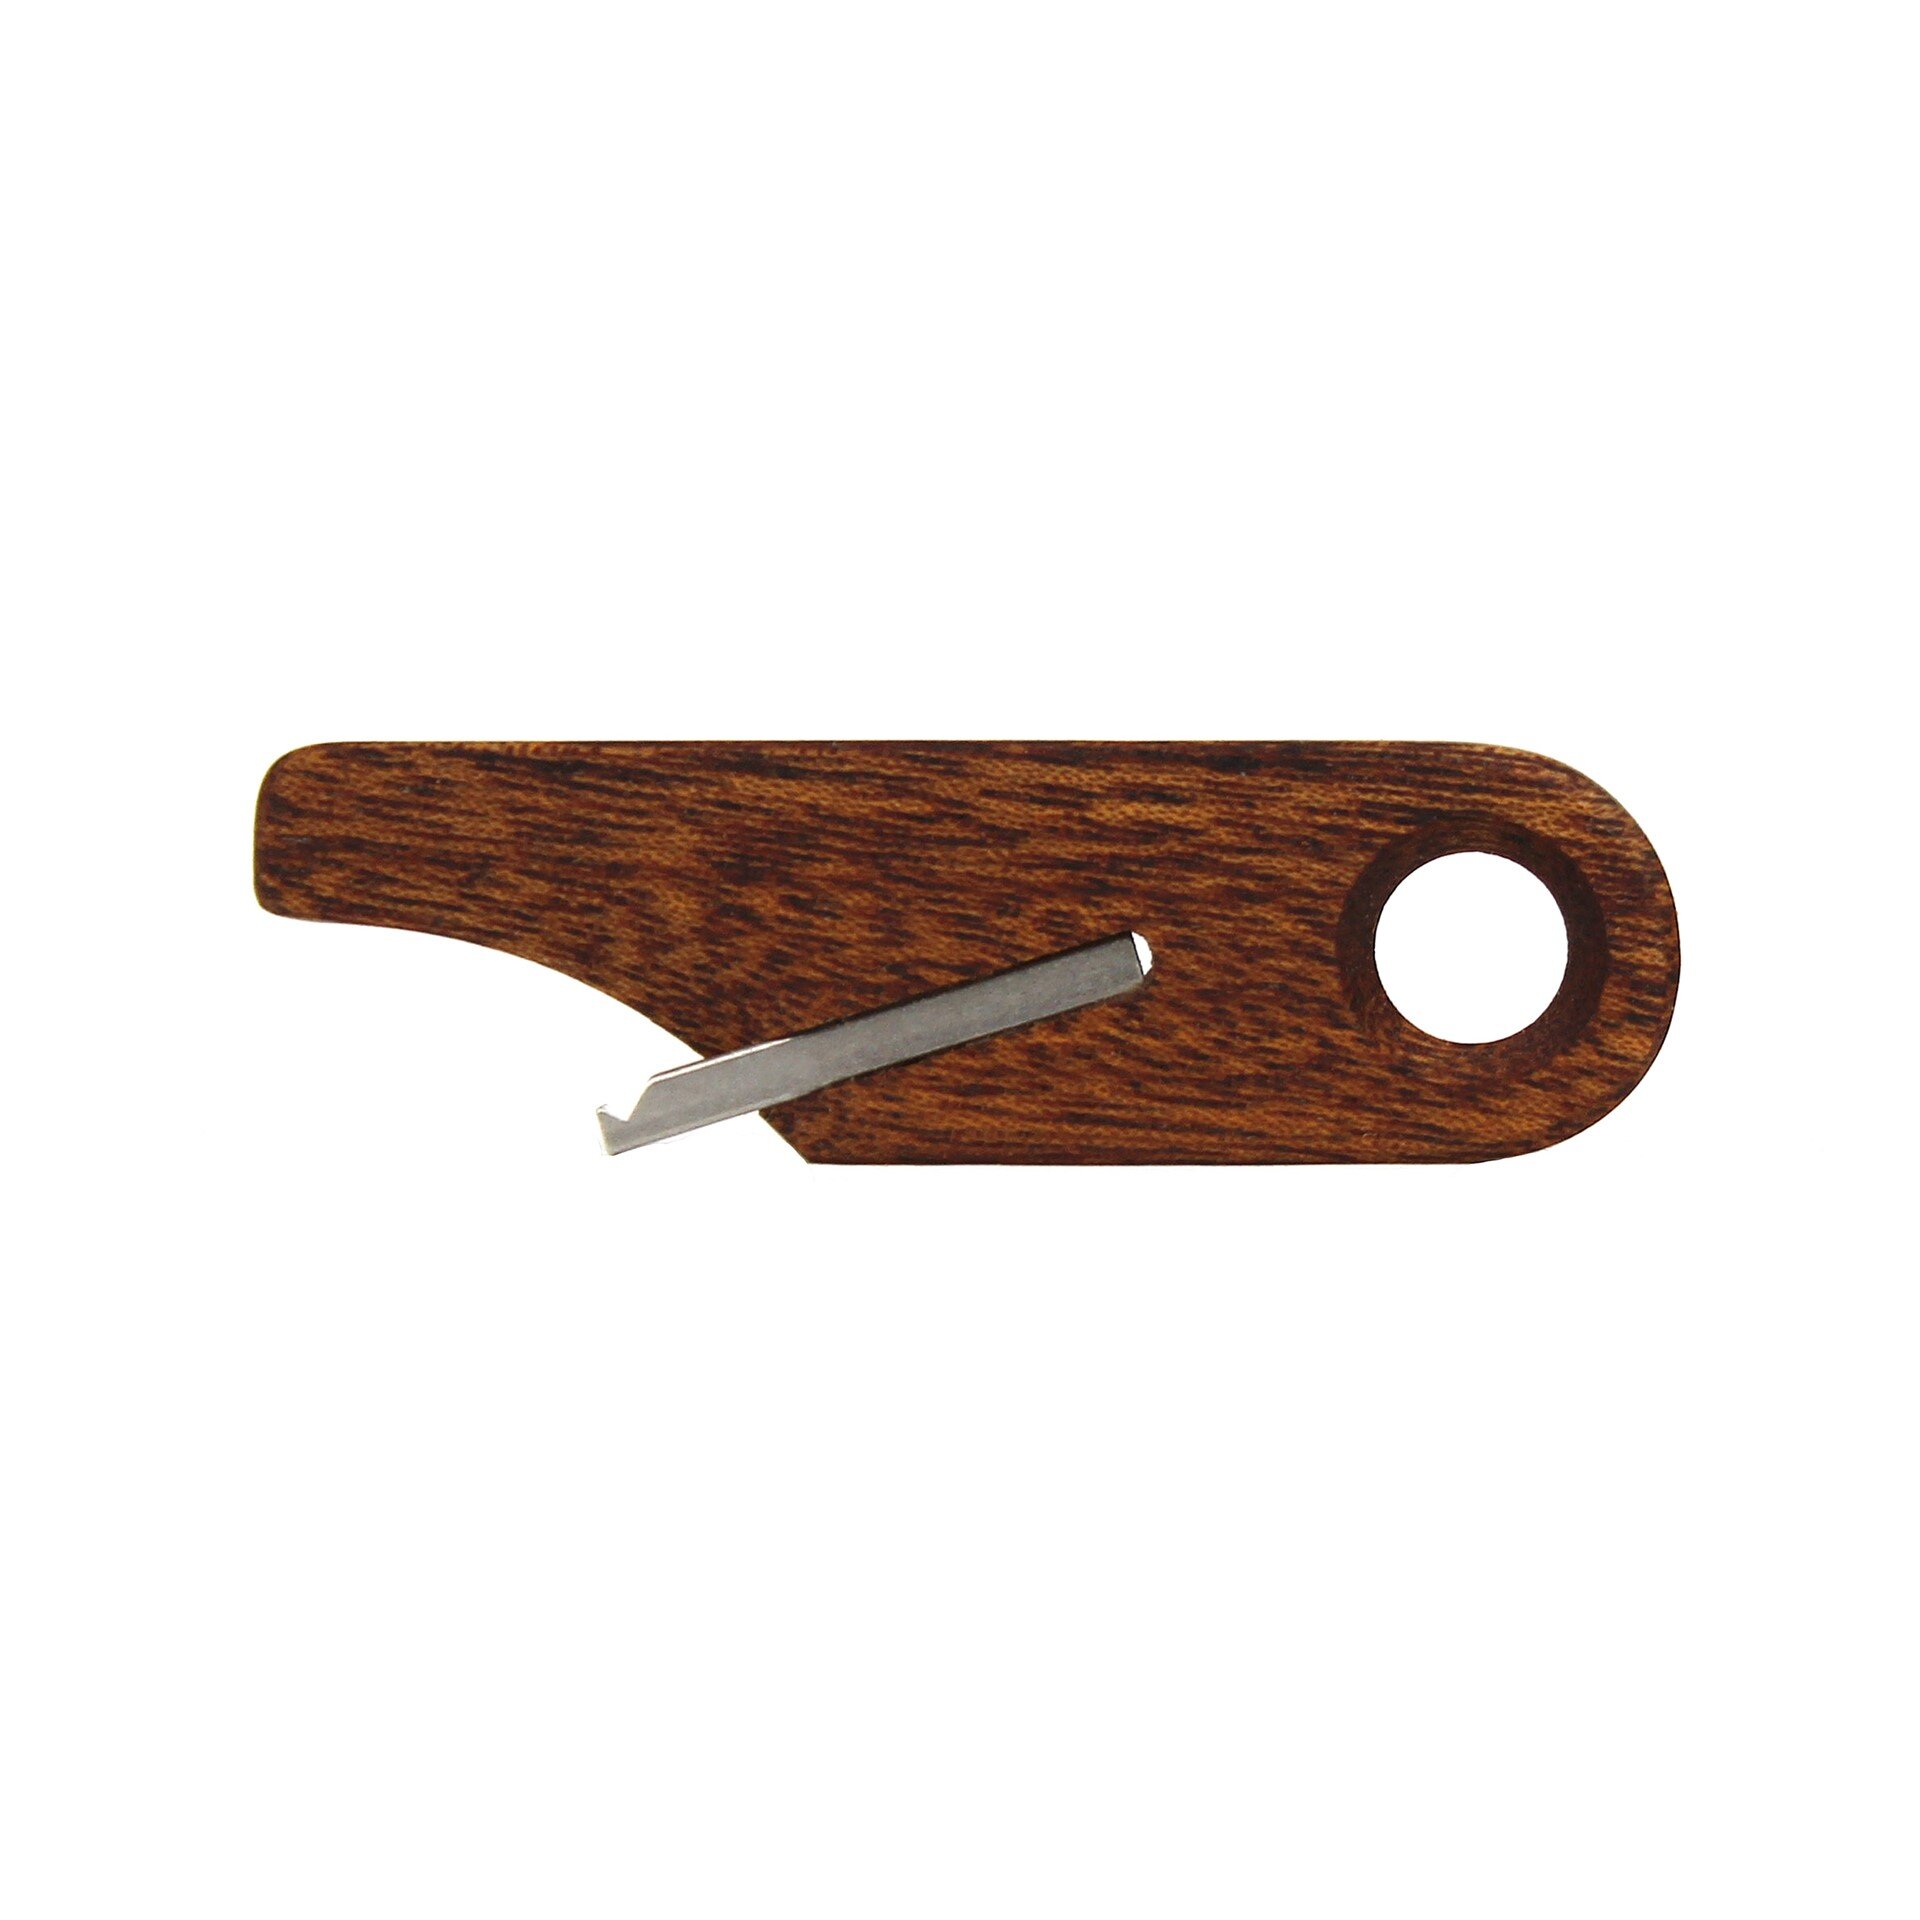 Wooden Bottle Opener Keychain by Rift Wood Company - Mahogany.JPG